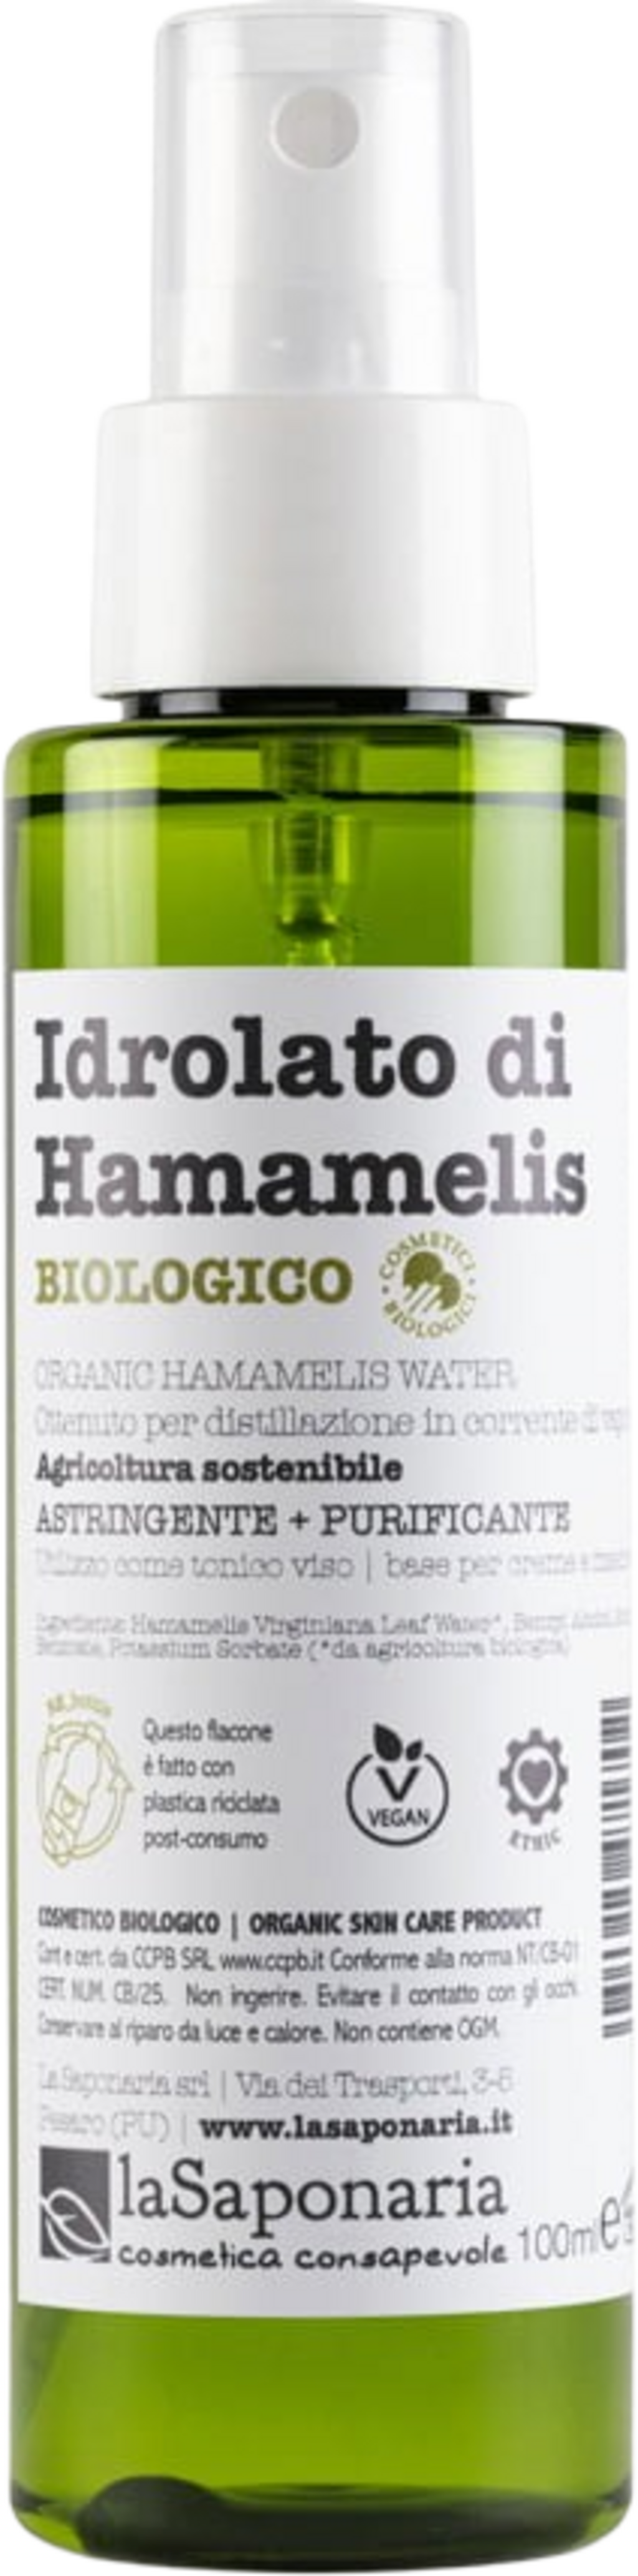 Idrolato di Hamamelis Bio - 100 ml